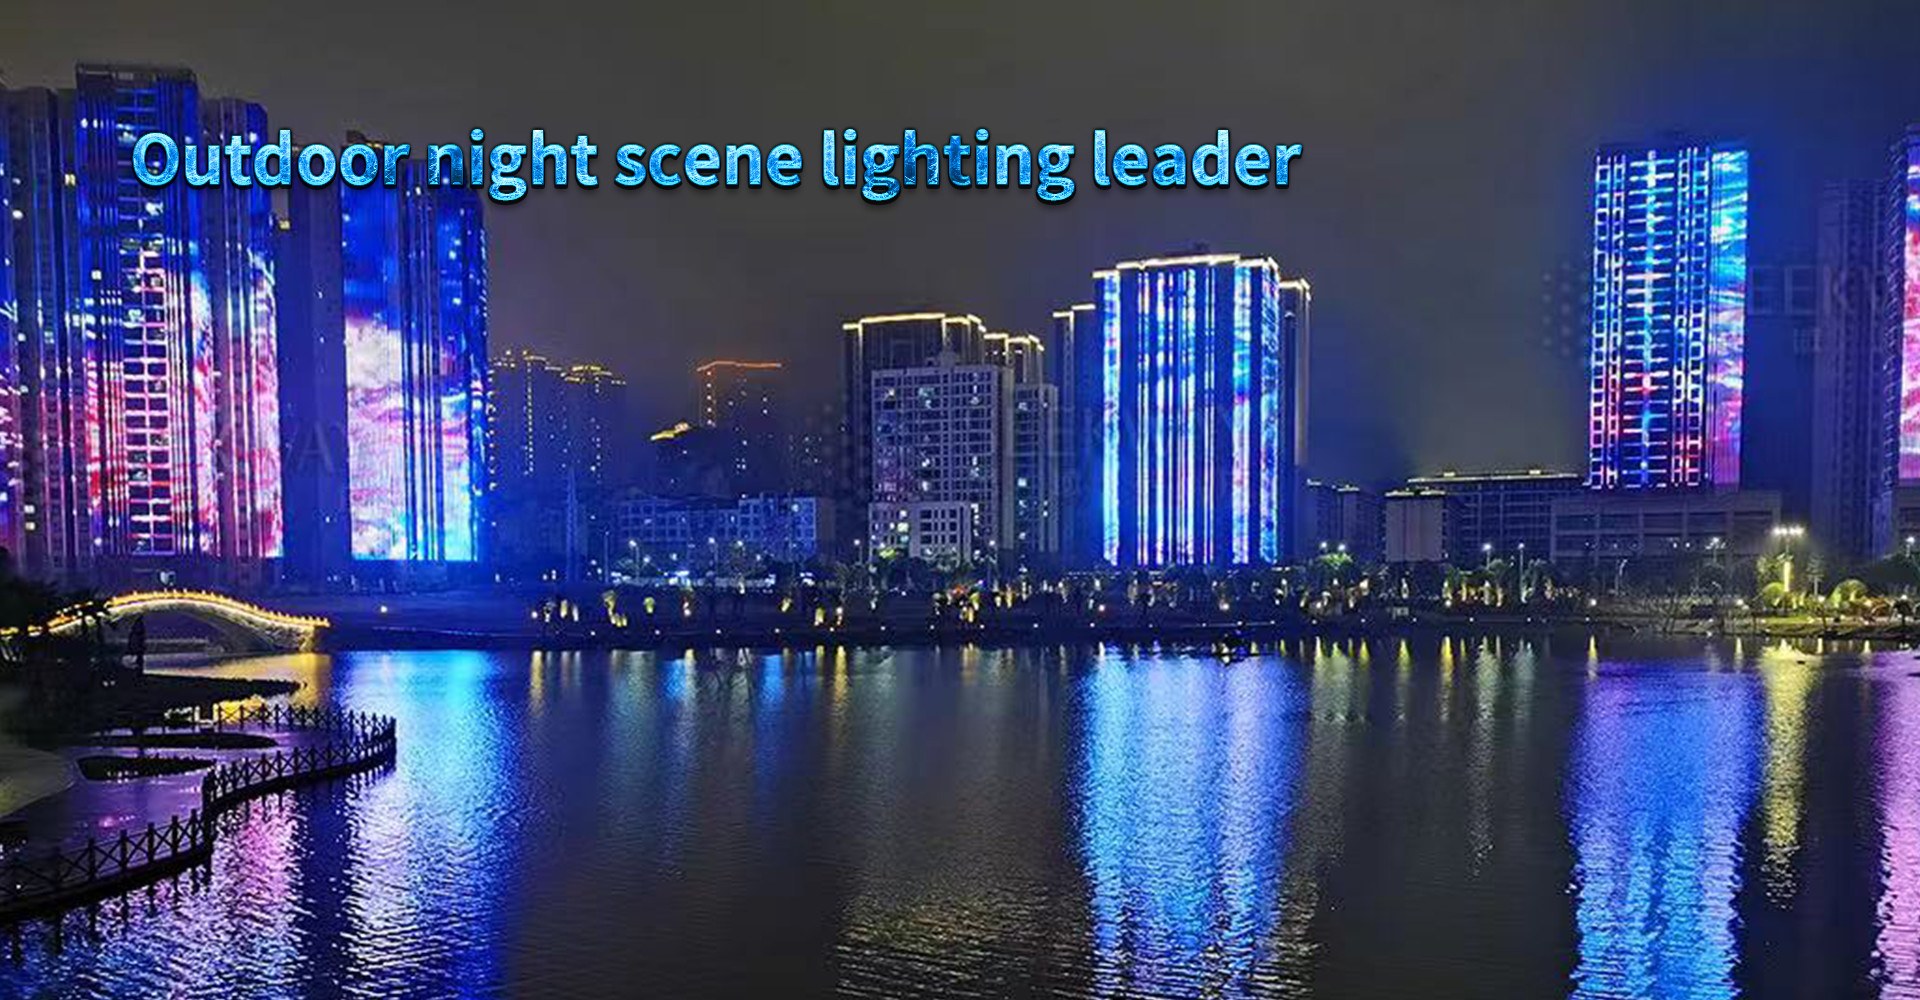 quality LED Transparent Film Screen factory